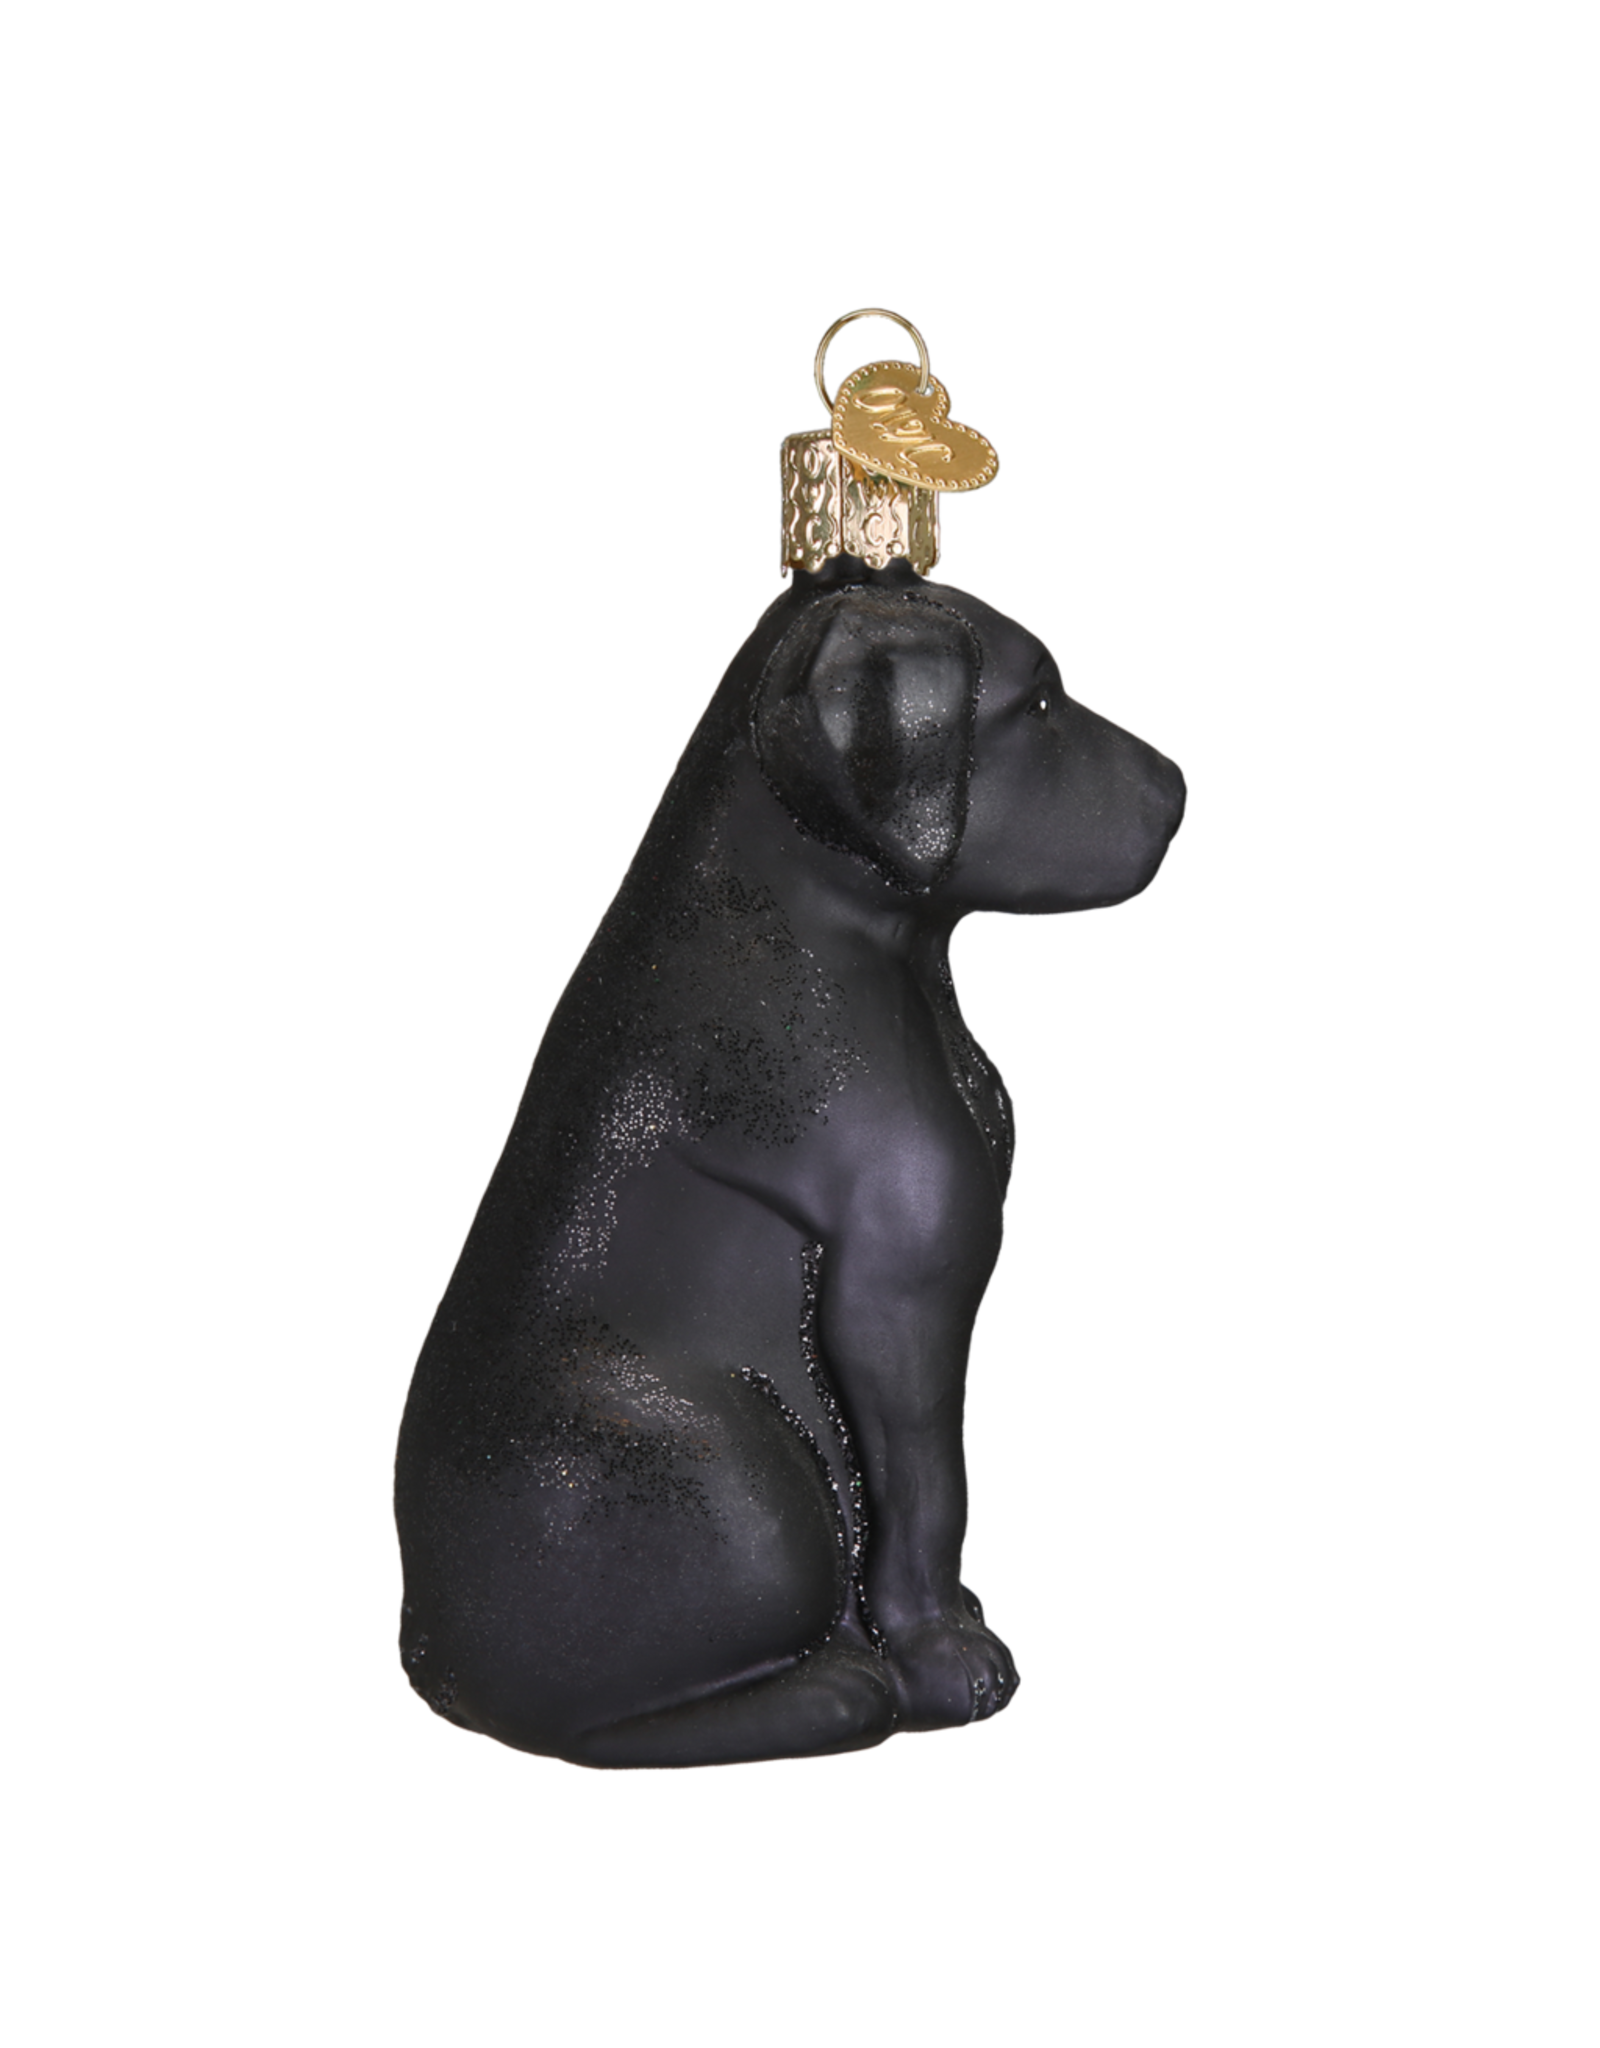 Old World Christmas Black Labrador Ornament